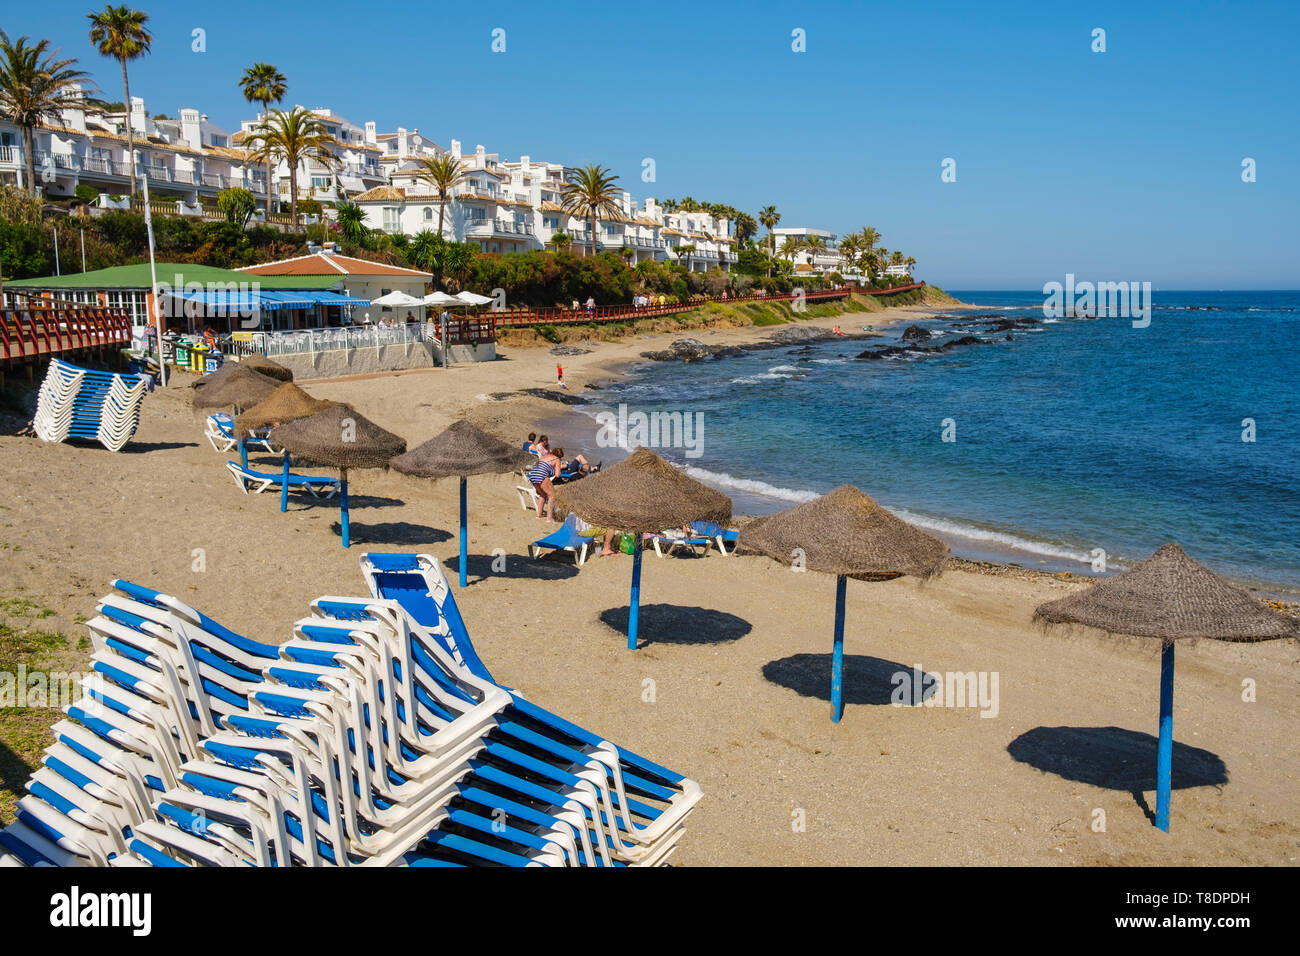 Tourists on the beach. Mijas Costa, Malaga province, Costa del Sol, Mediterrenean sea, Andalusia, Spain Europe Stock Photo